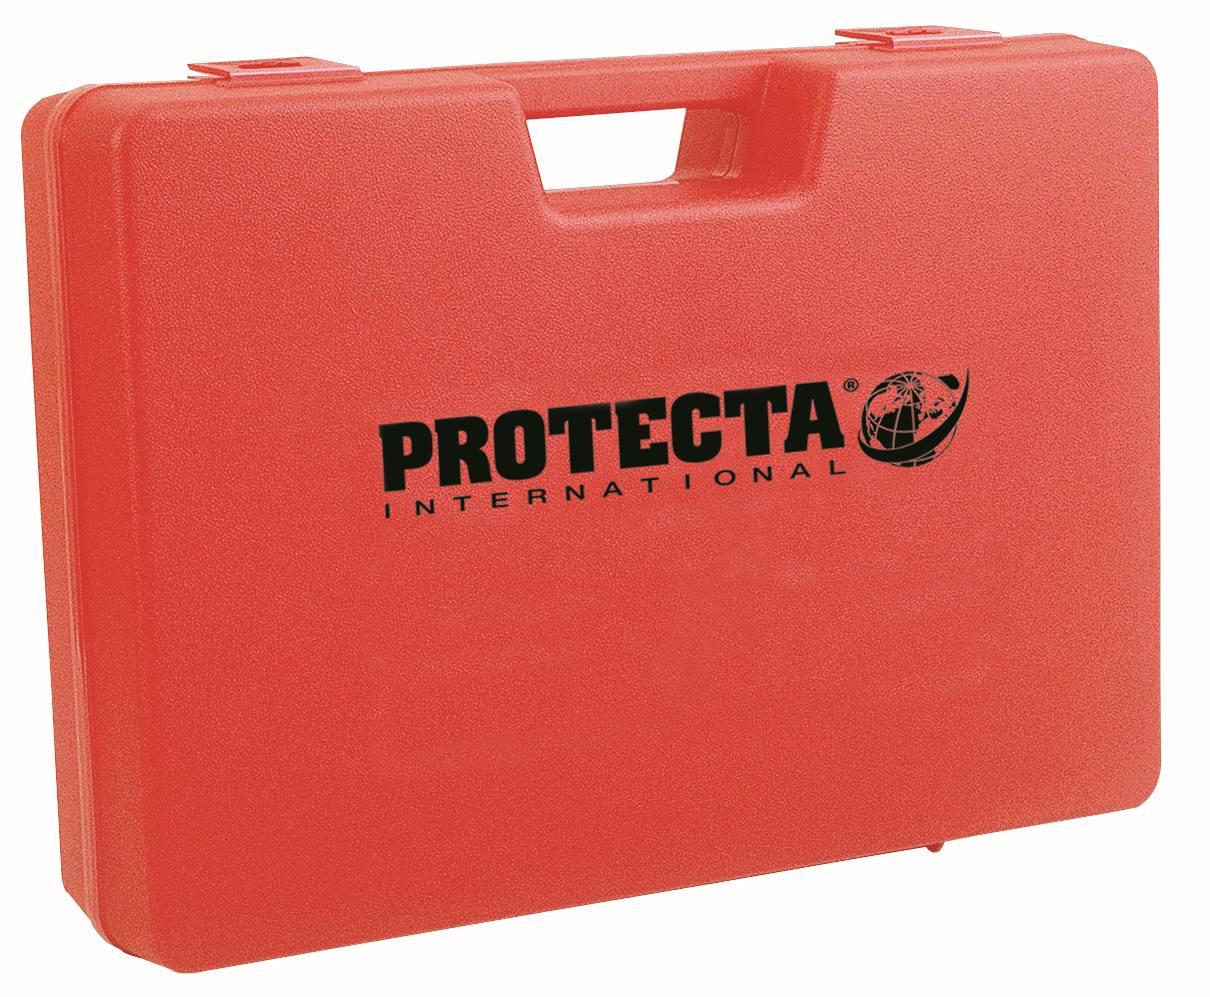 3M PROTECTA Koffer Größe: 50 x 37 x 12,5 cm